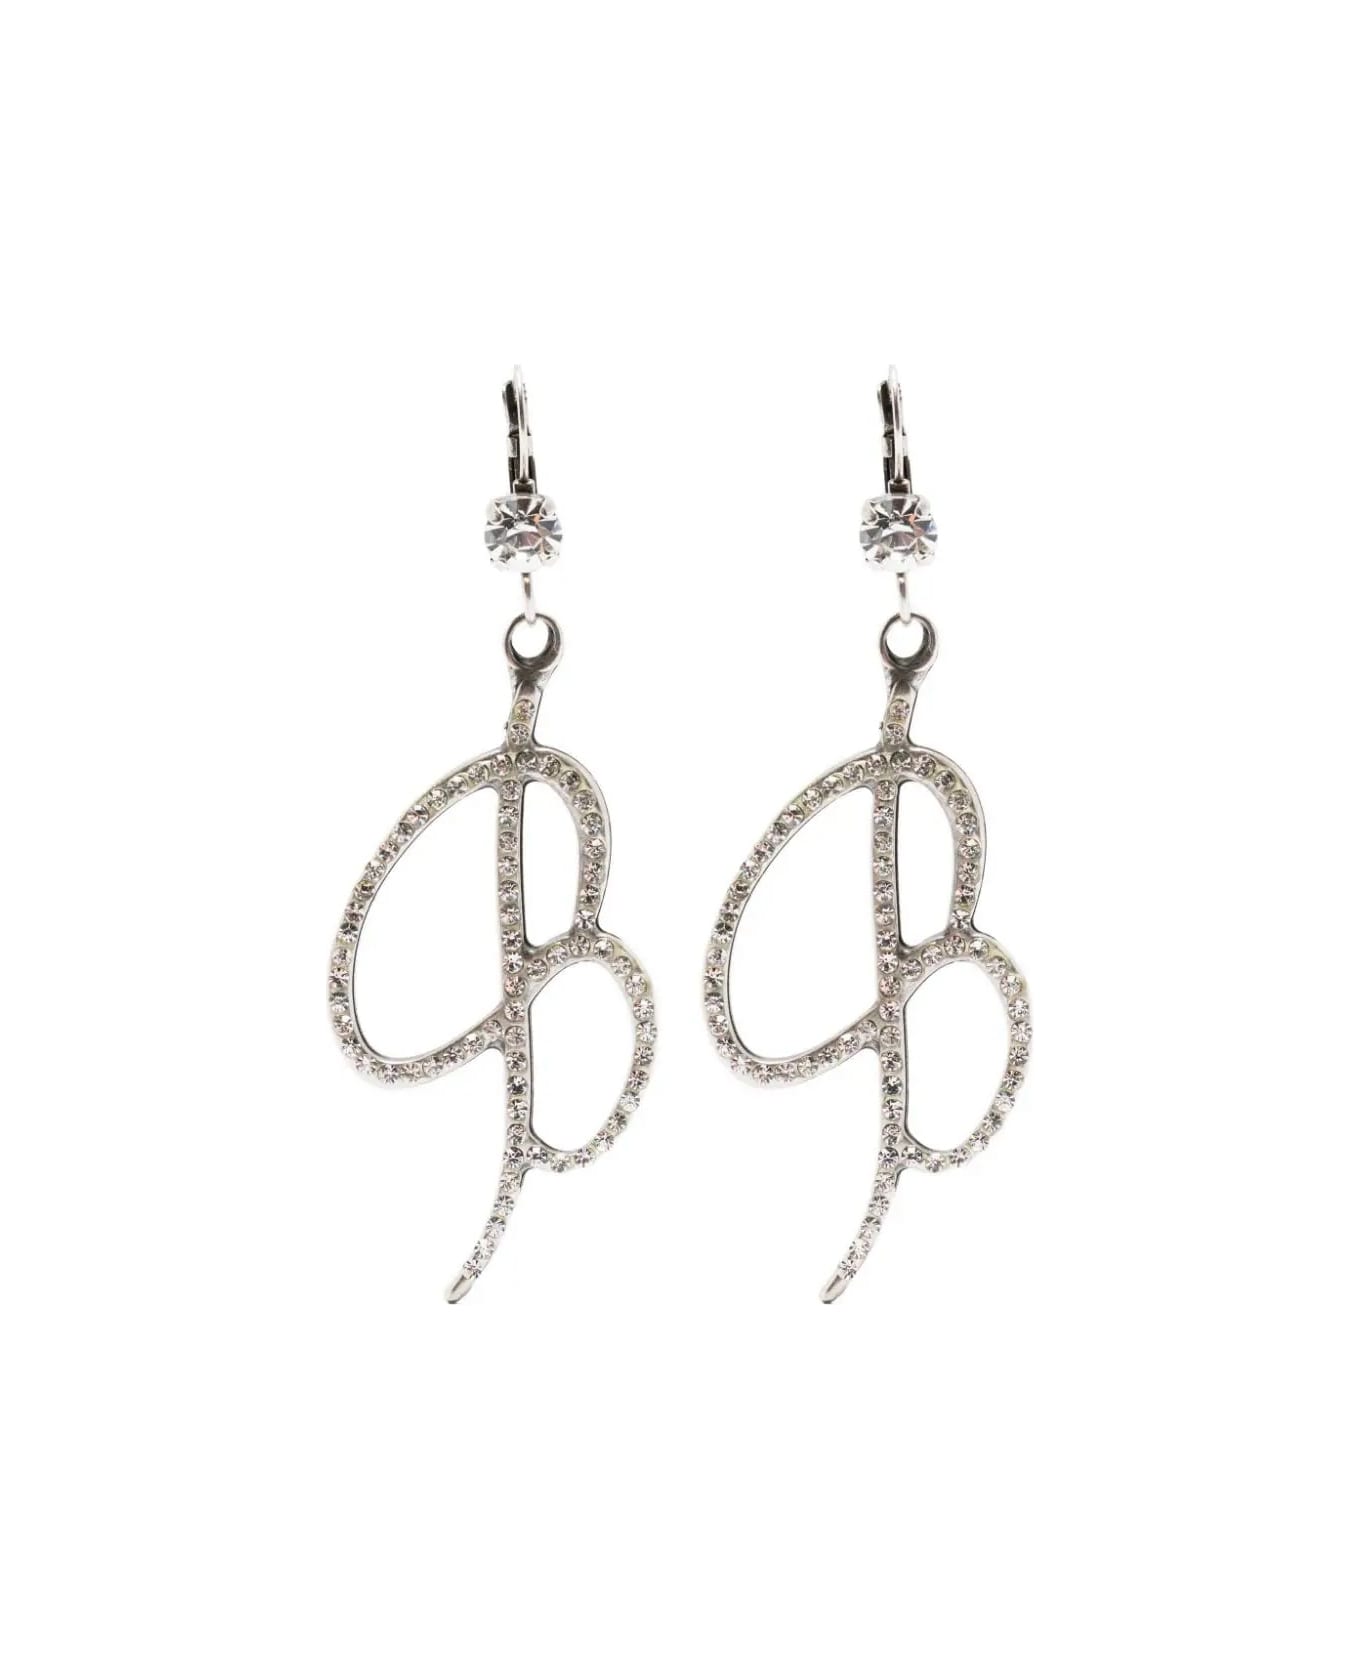 Blumarine 'b' Earrings With Crystals - Nikel